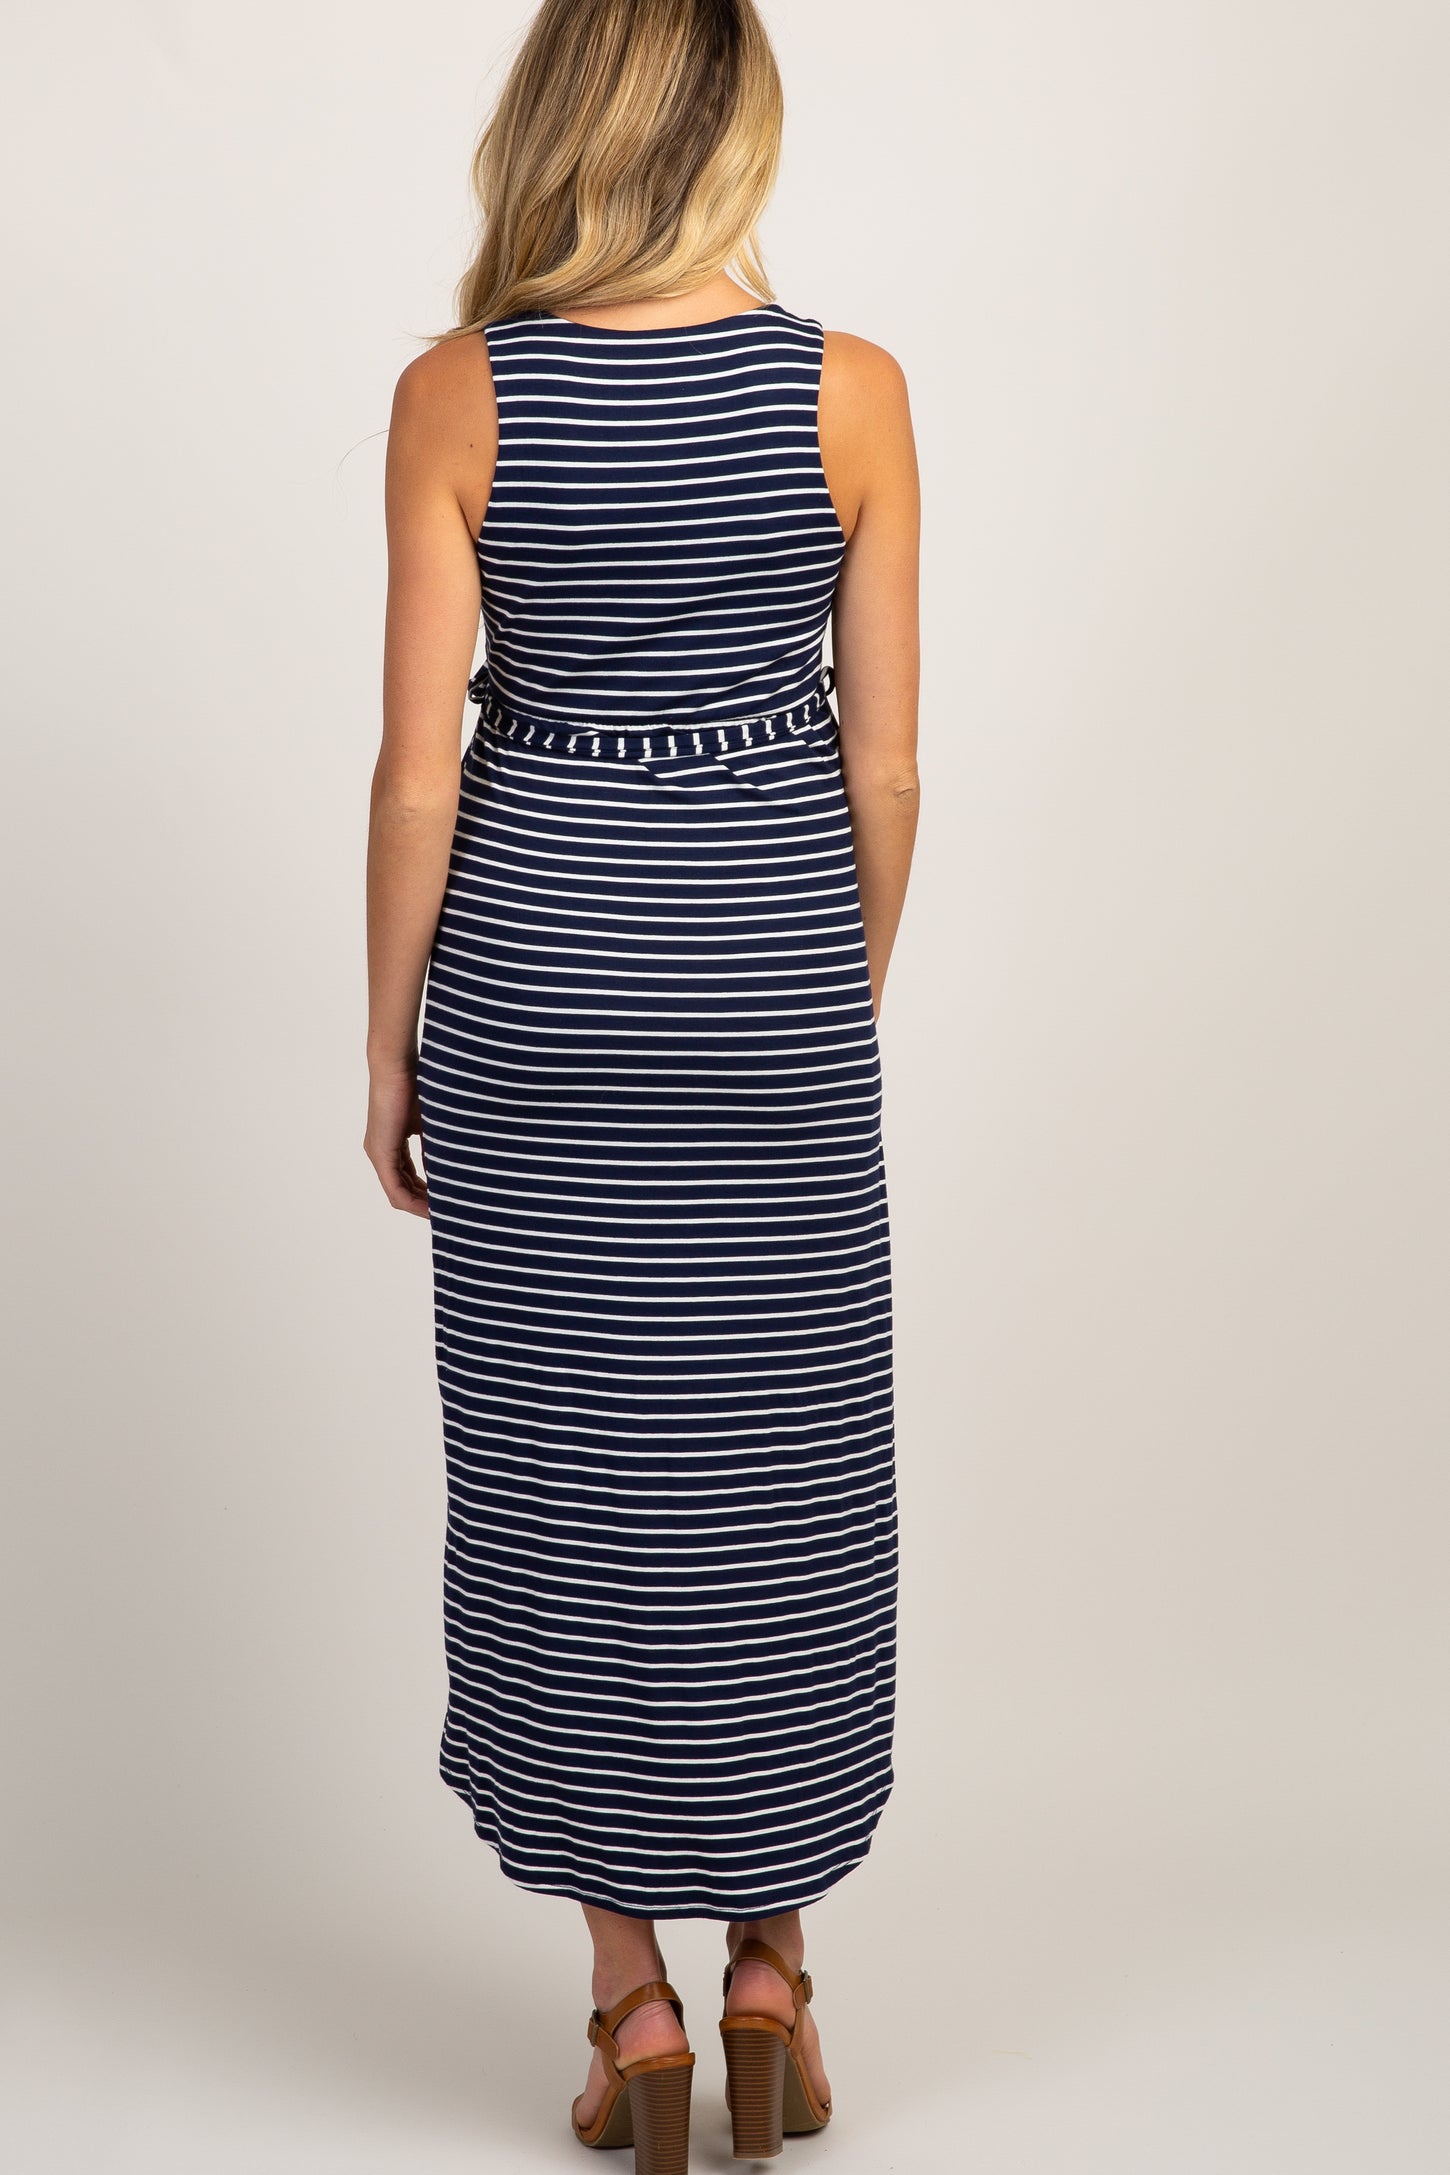 Navy Striped Hi-Low Maternity Wrap Dress